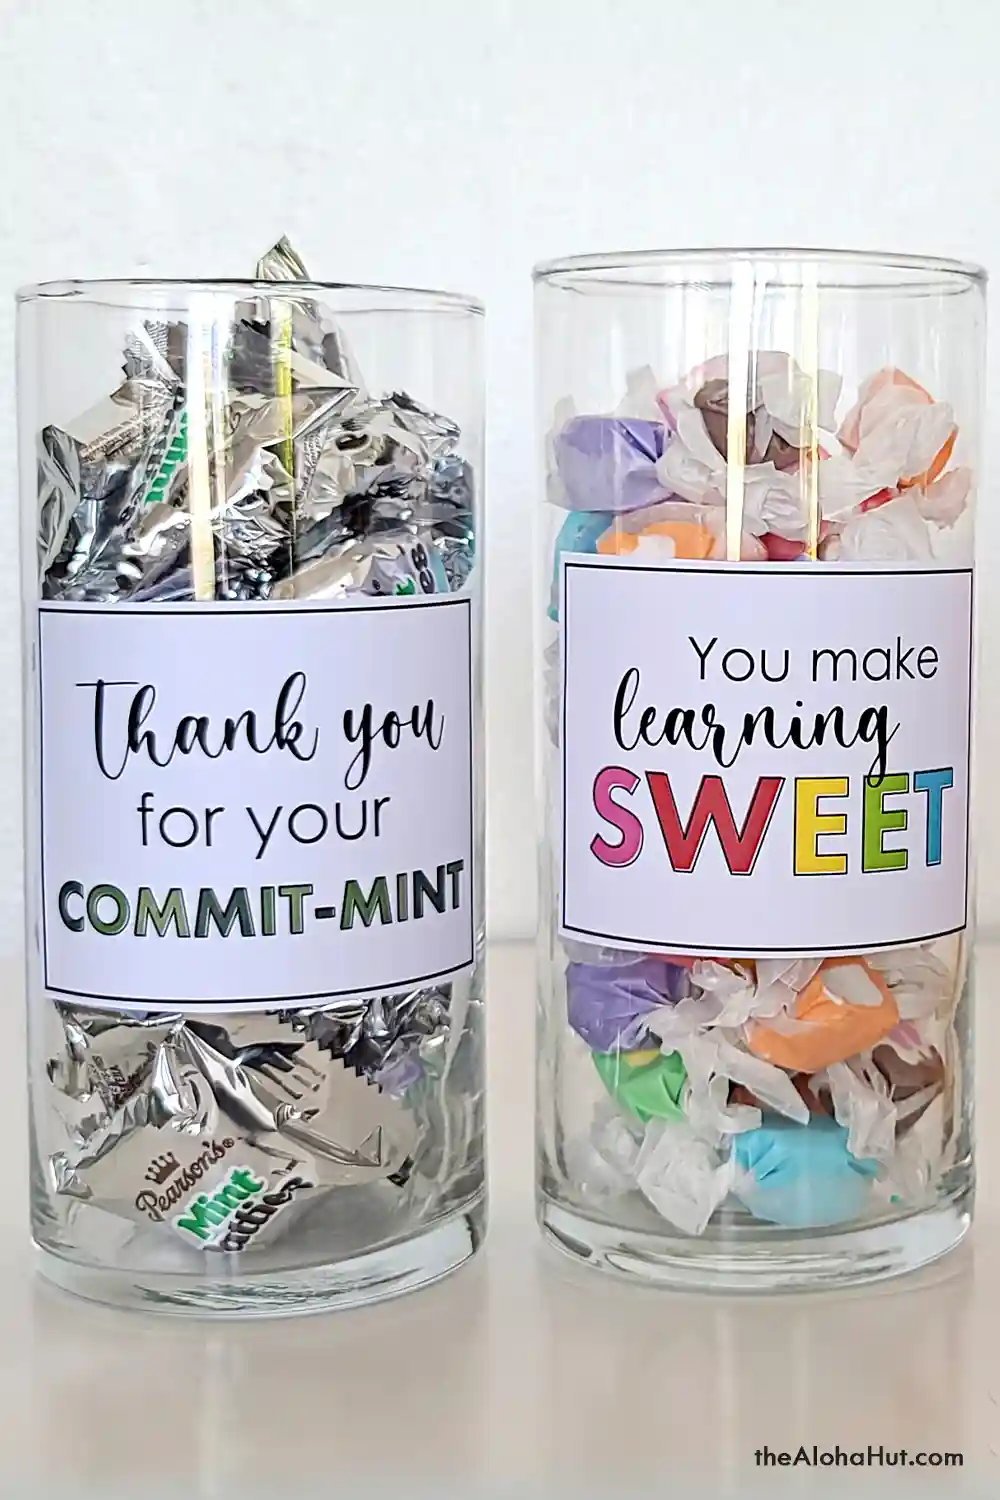 Teacher Appreciation Week - Candy Bar Theme - free printable - labels